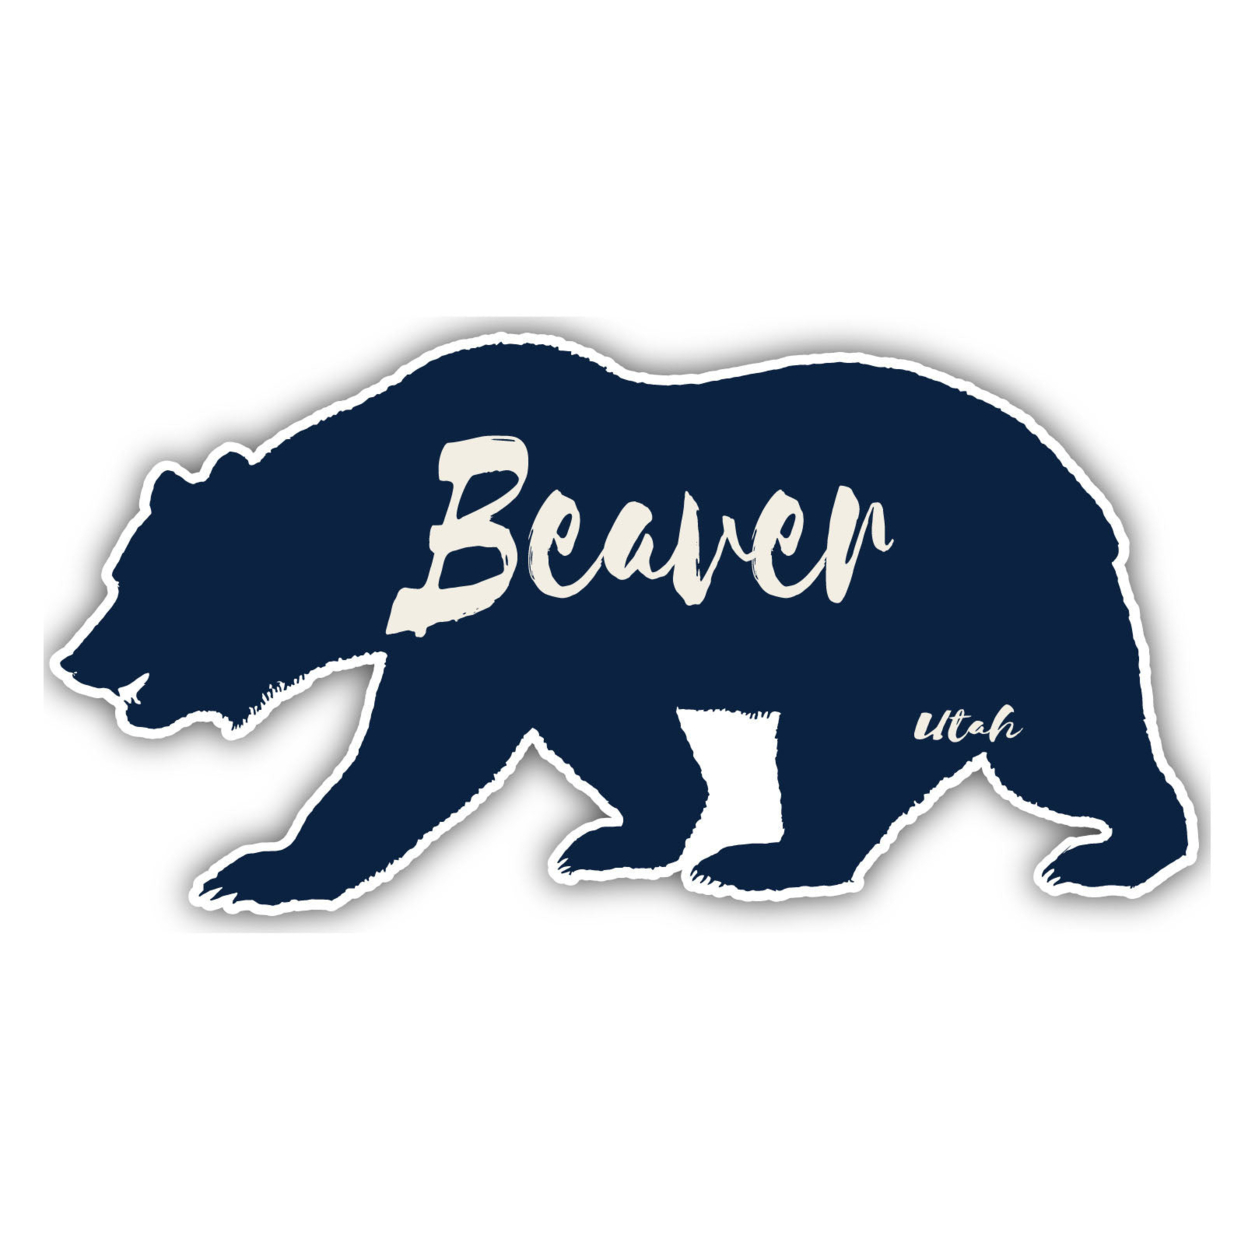 Beaver Utah Souvenir Decorative Stickers (Choose Theme And Size) - Single Unit, 12-Inch, Adventures Awaits